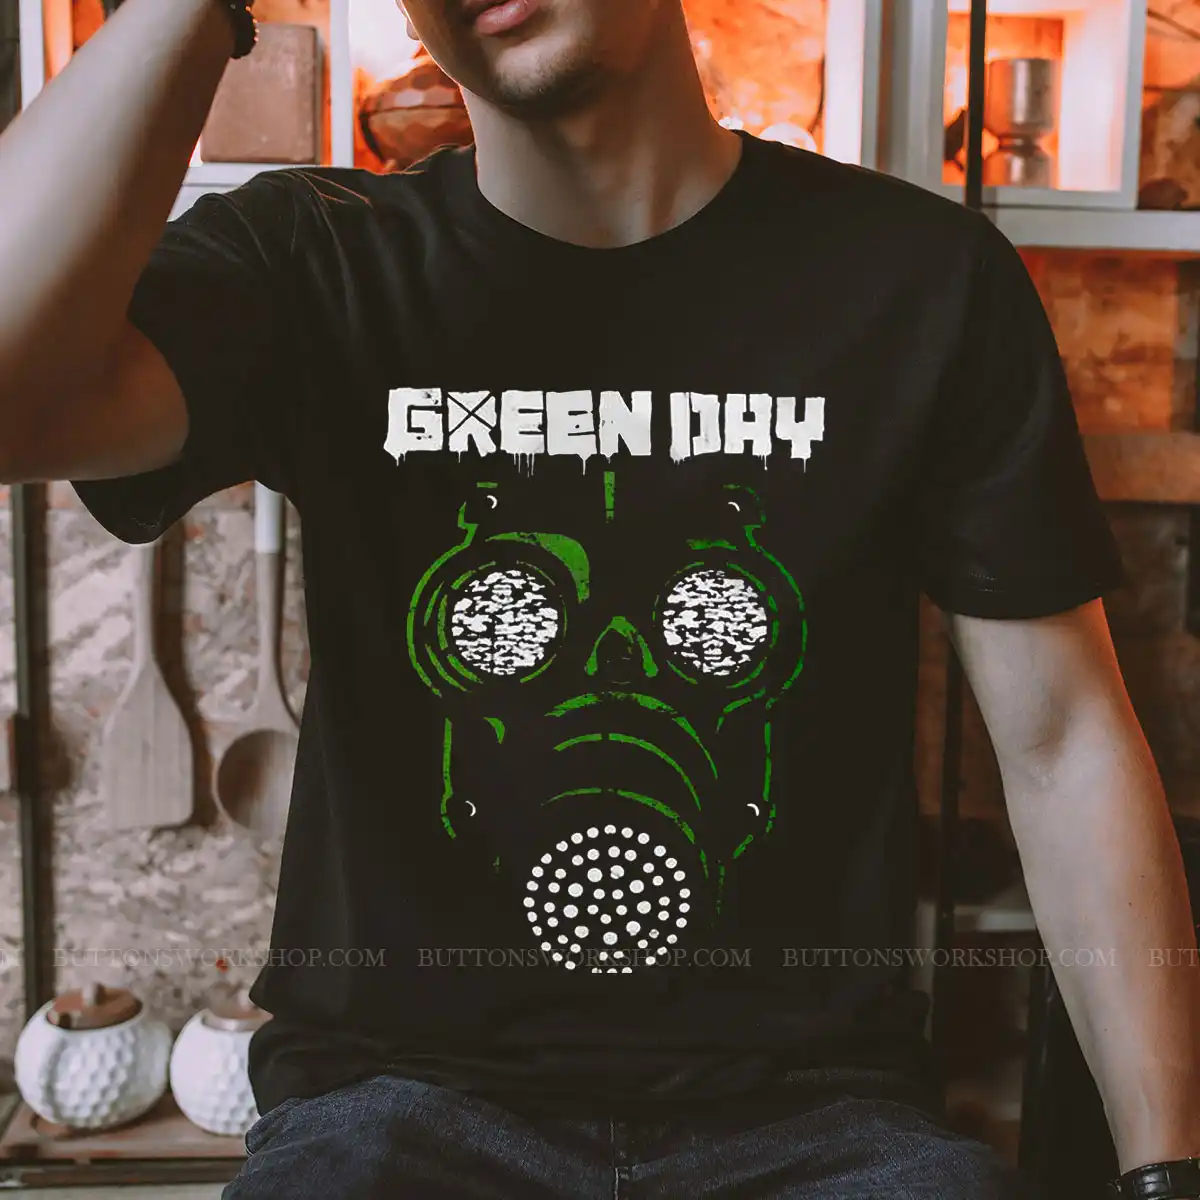 Green Day Revolution Radio Tour Shirt Unisex Tshirt